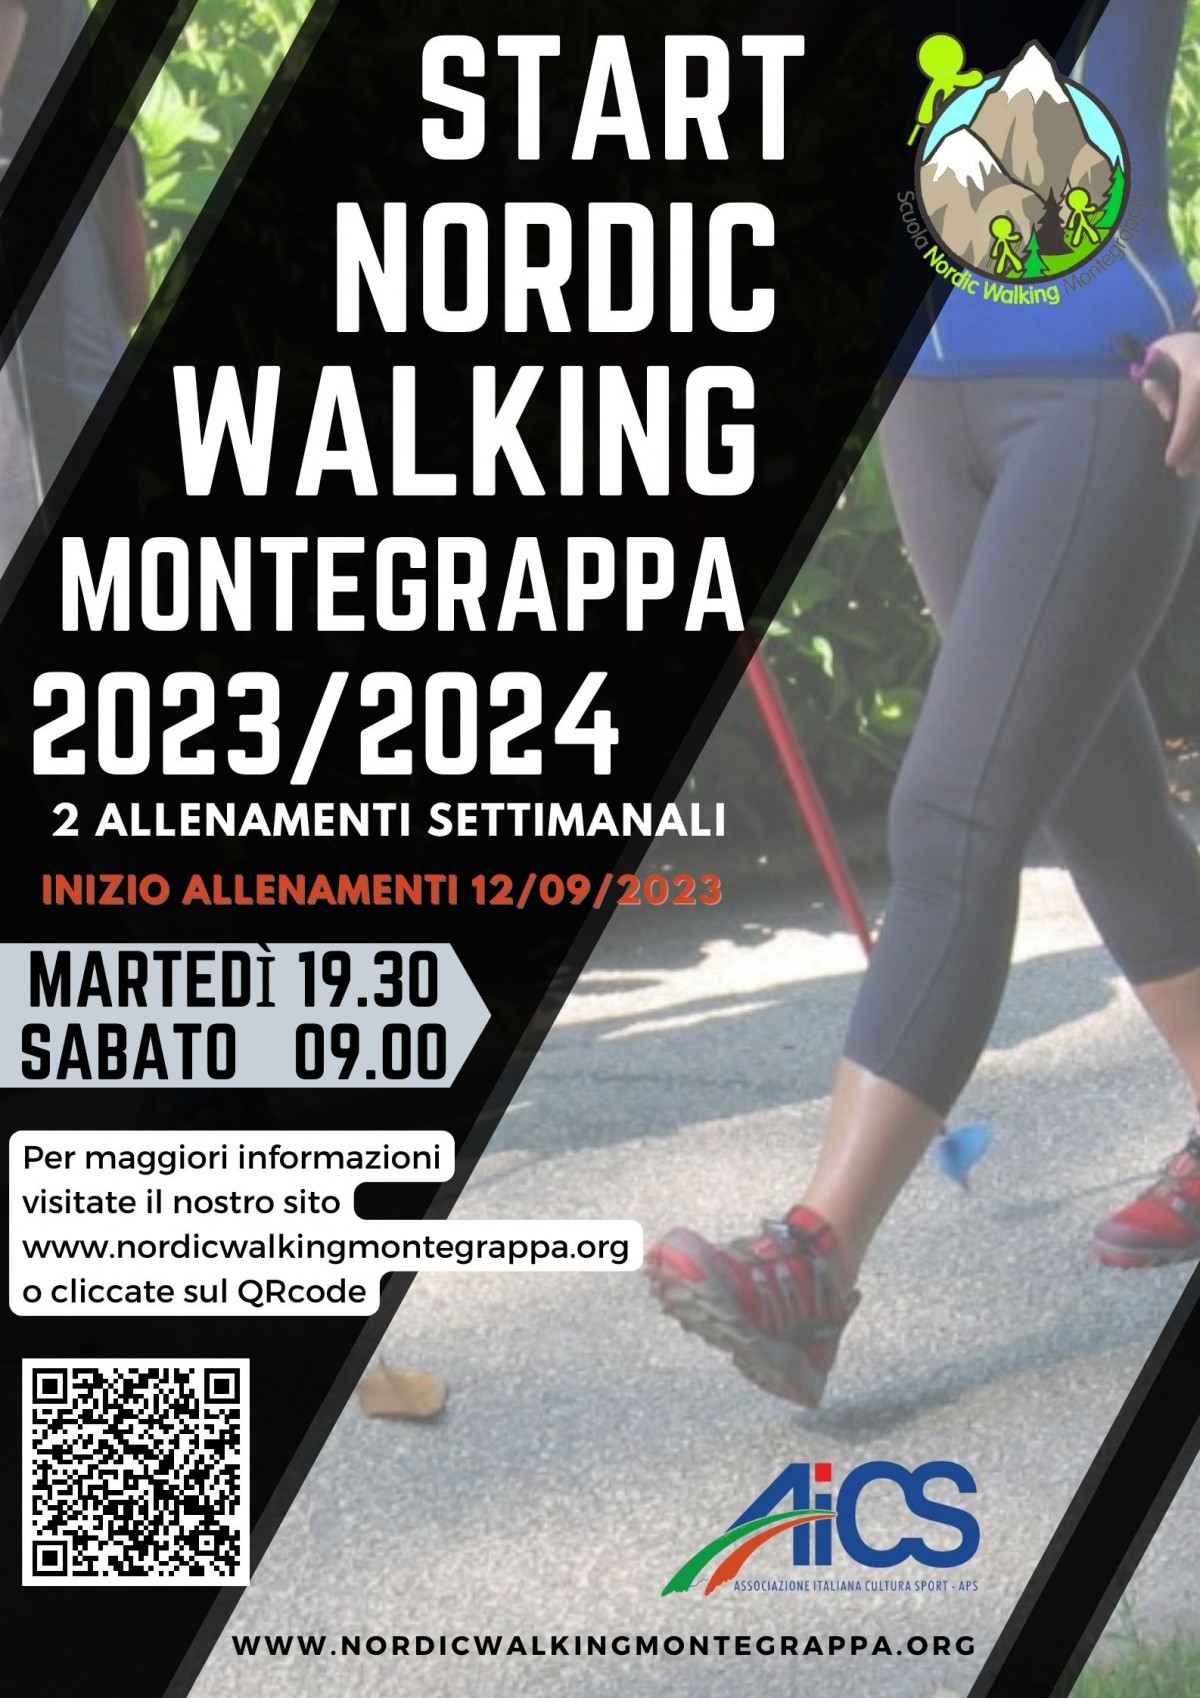 NORDIC walking montegrappa